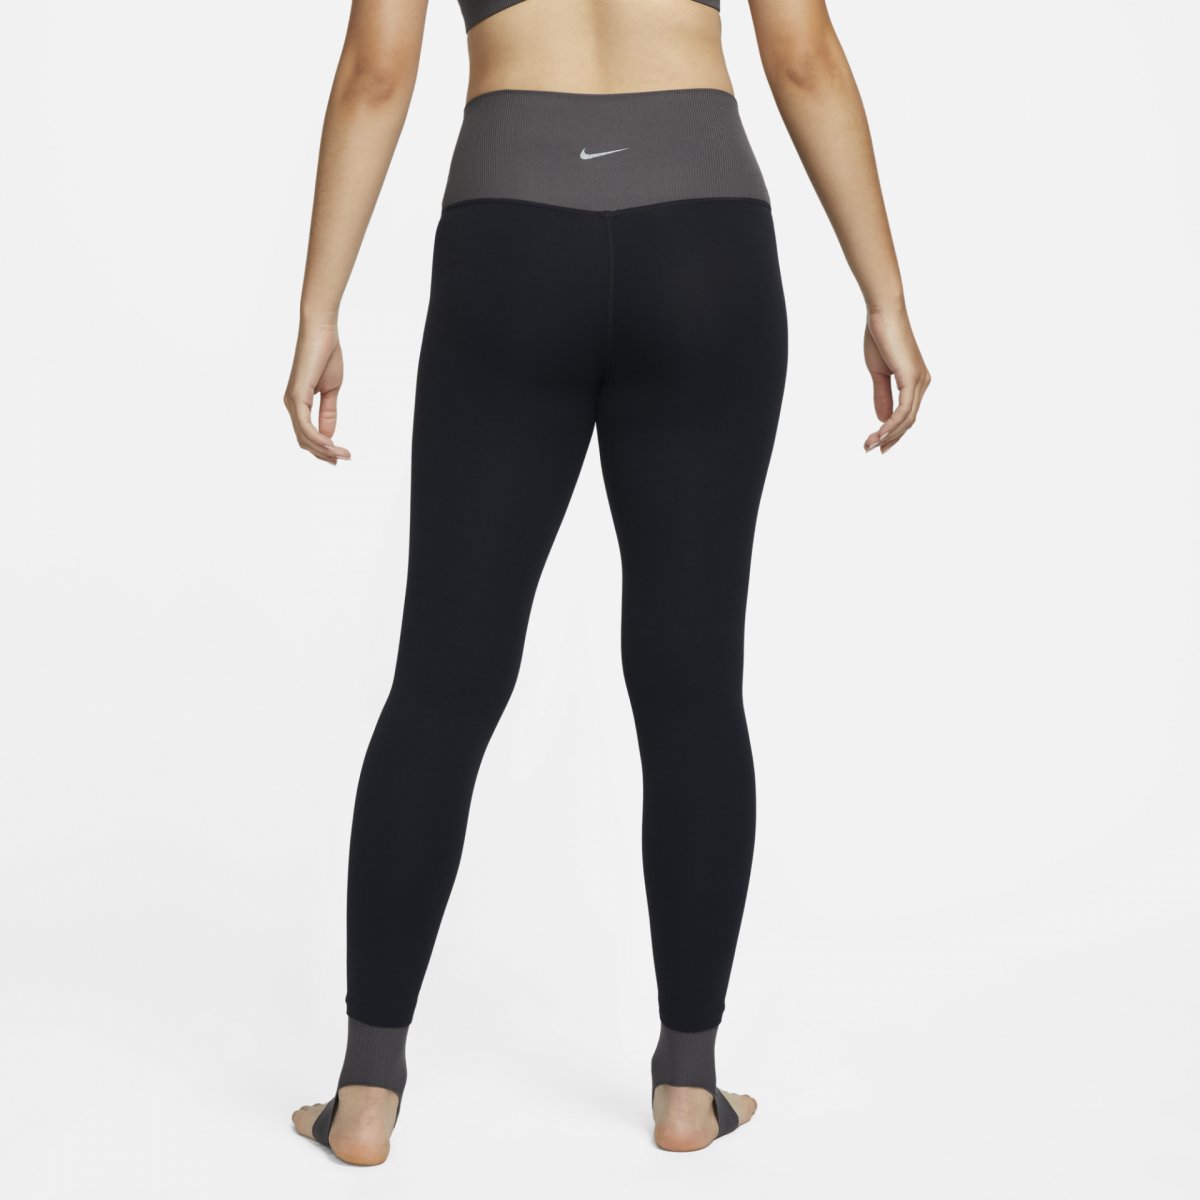 Nike Yoga Dri-FIT Luxe black Women's yoga leggings - Pants and